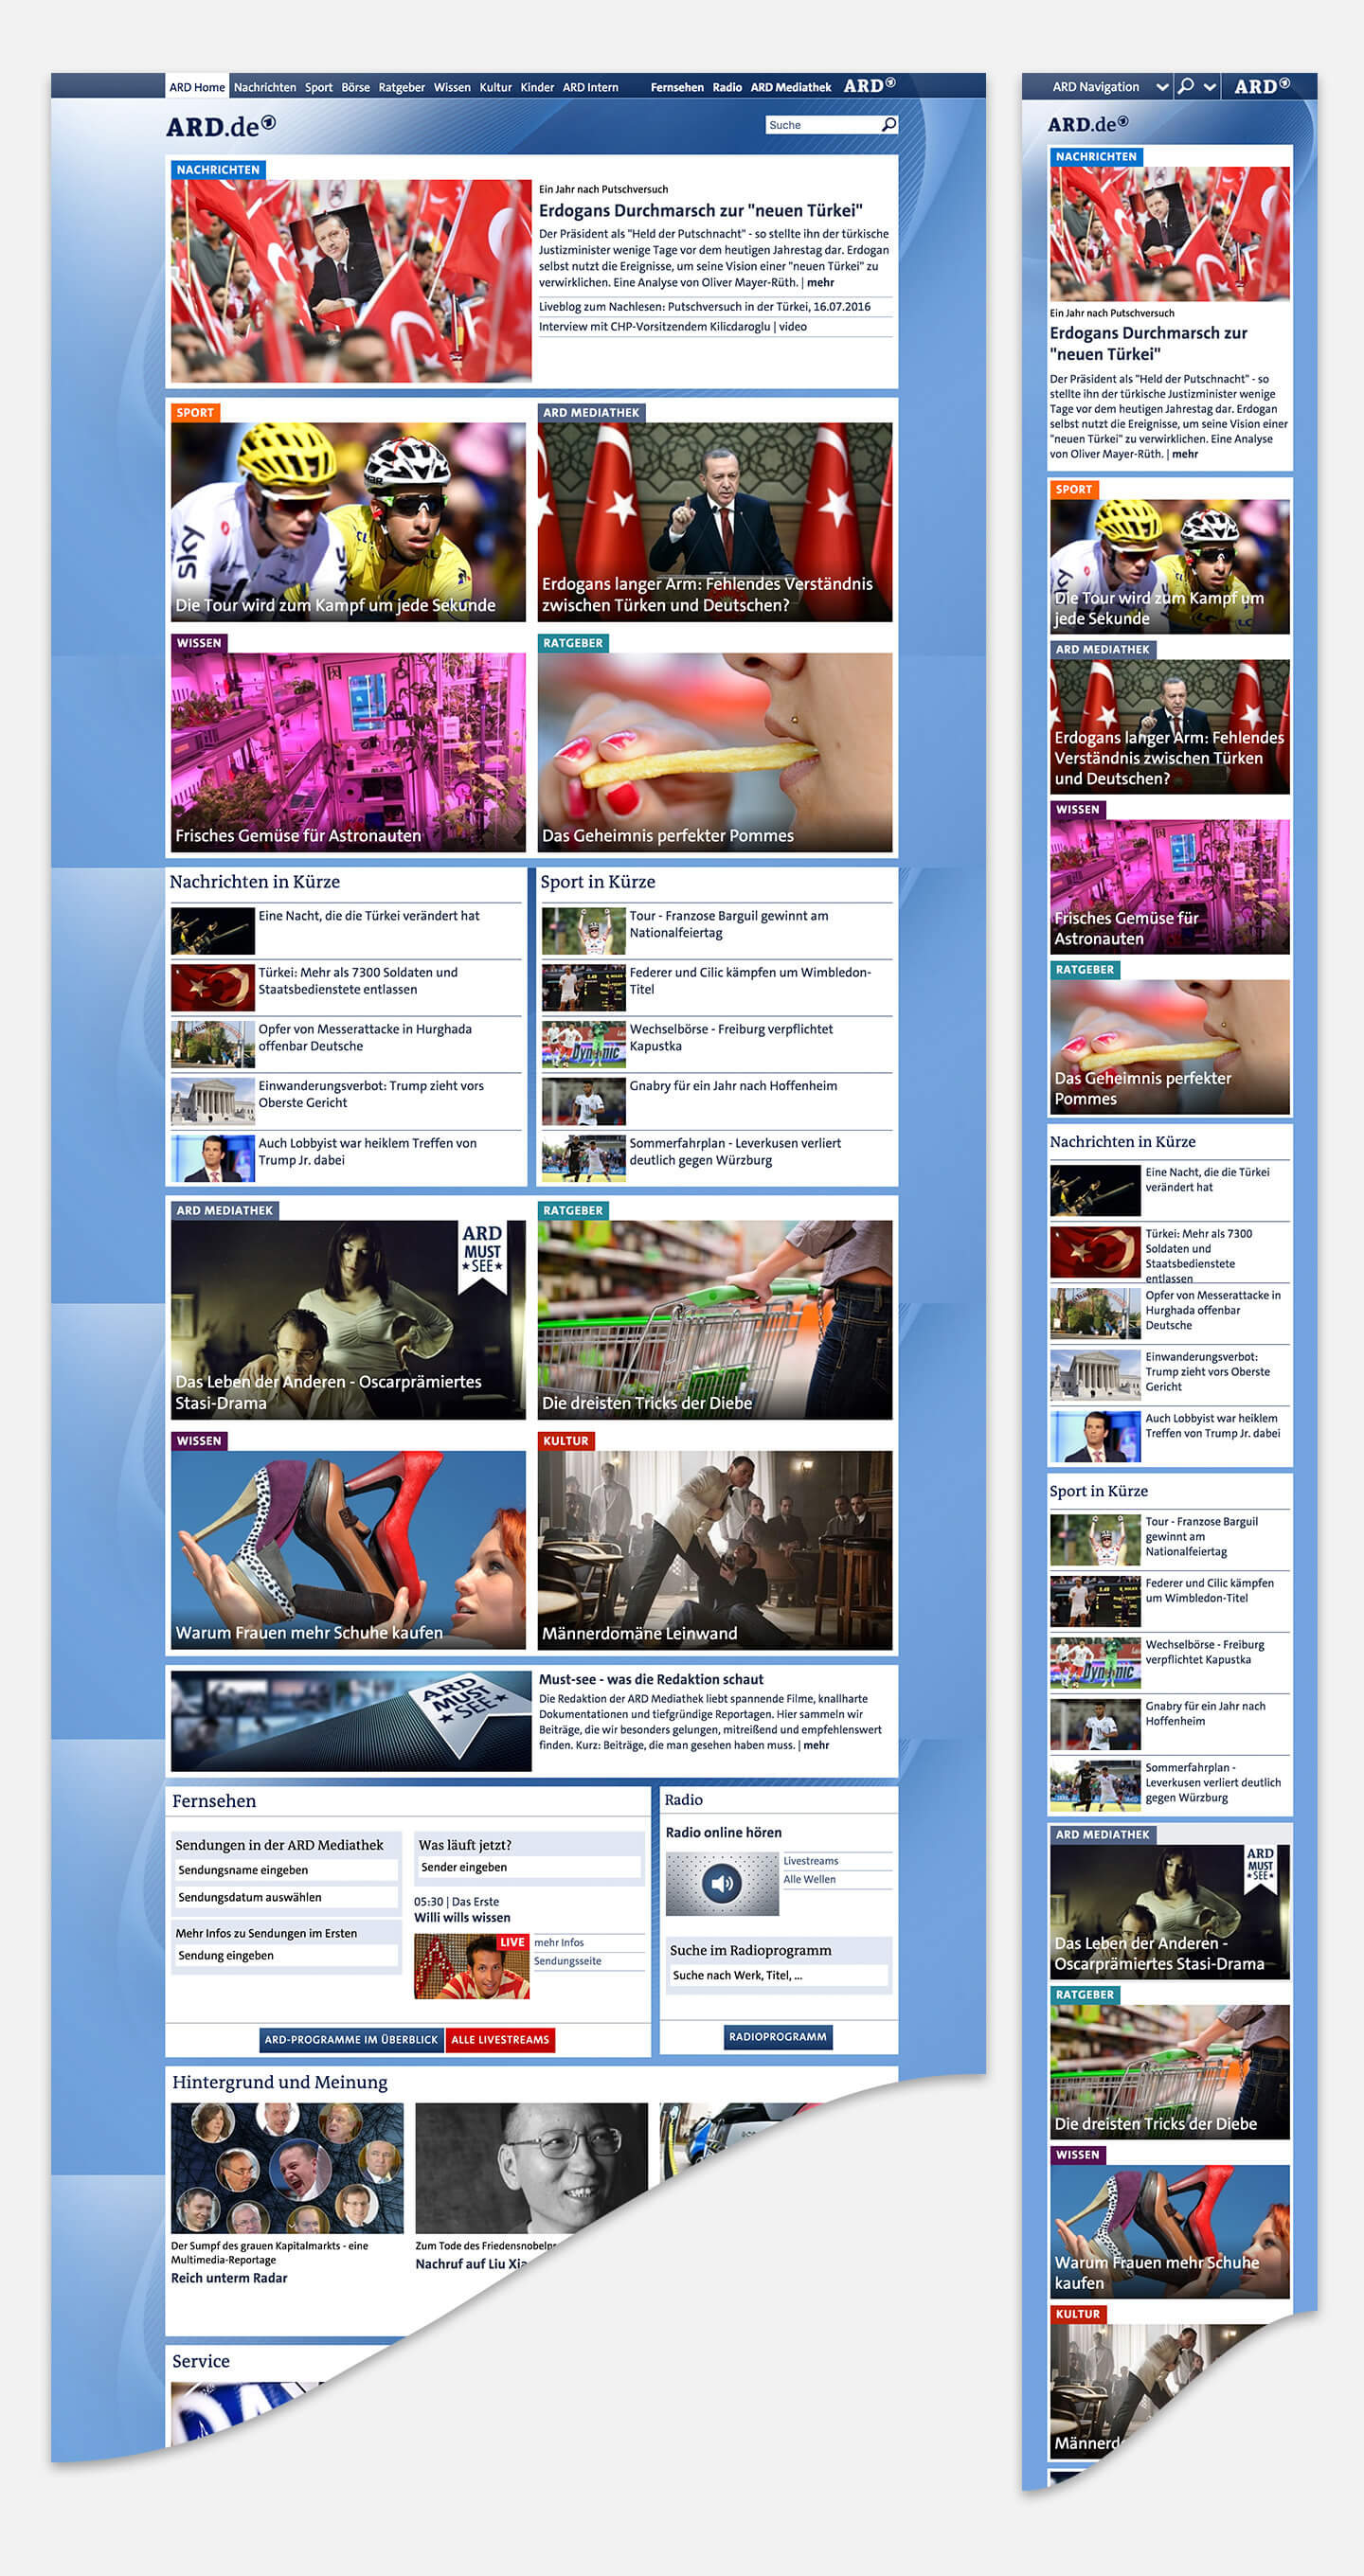 ARD.de Media Platform image 2